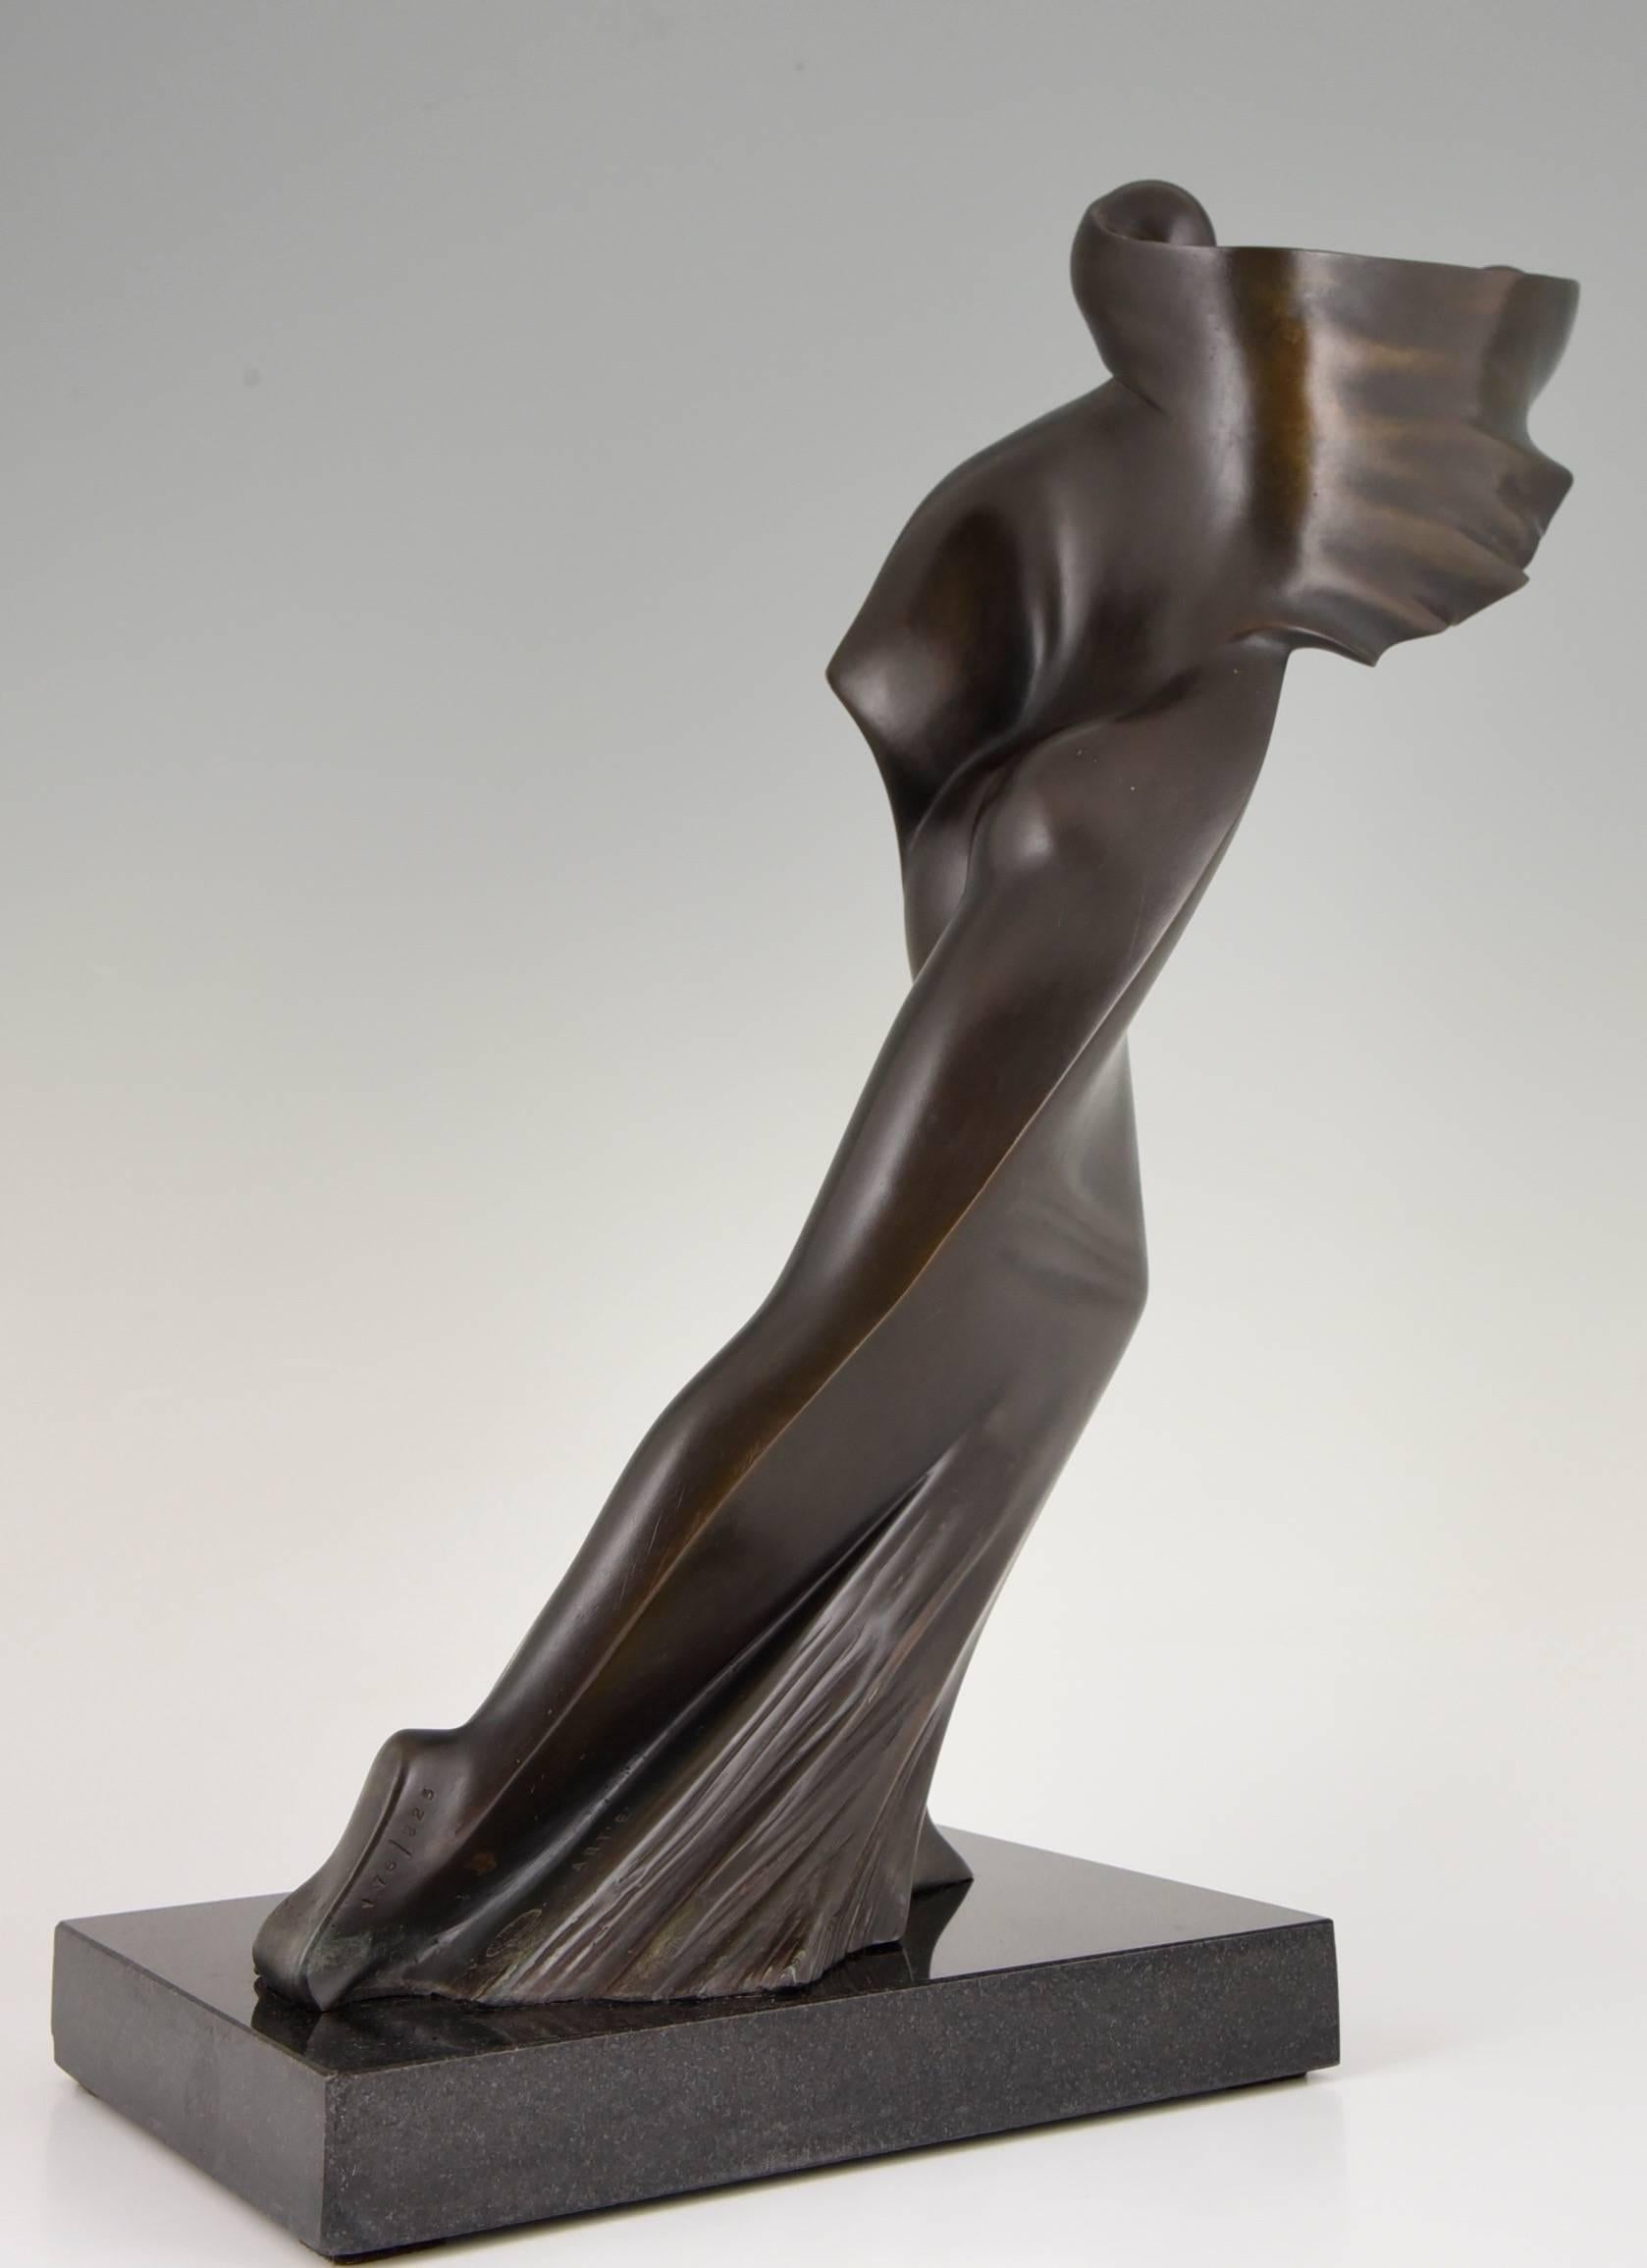 French Modern bronze sculpture of a woman by Jean Pierre Baldini.